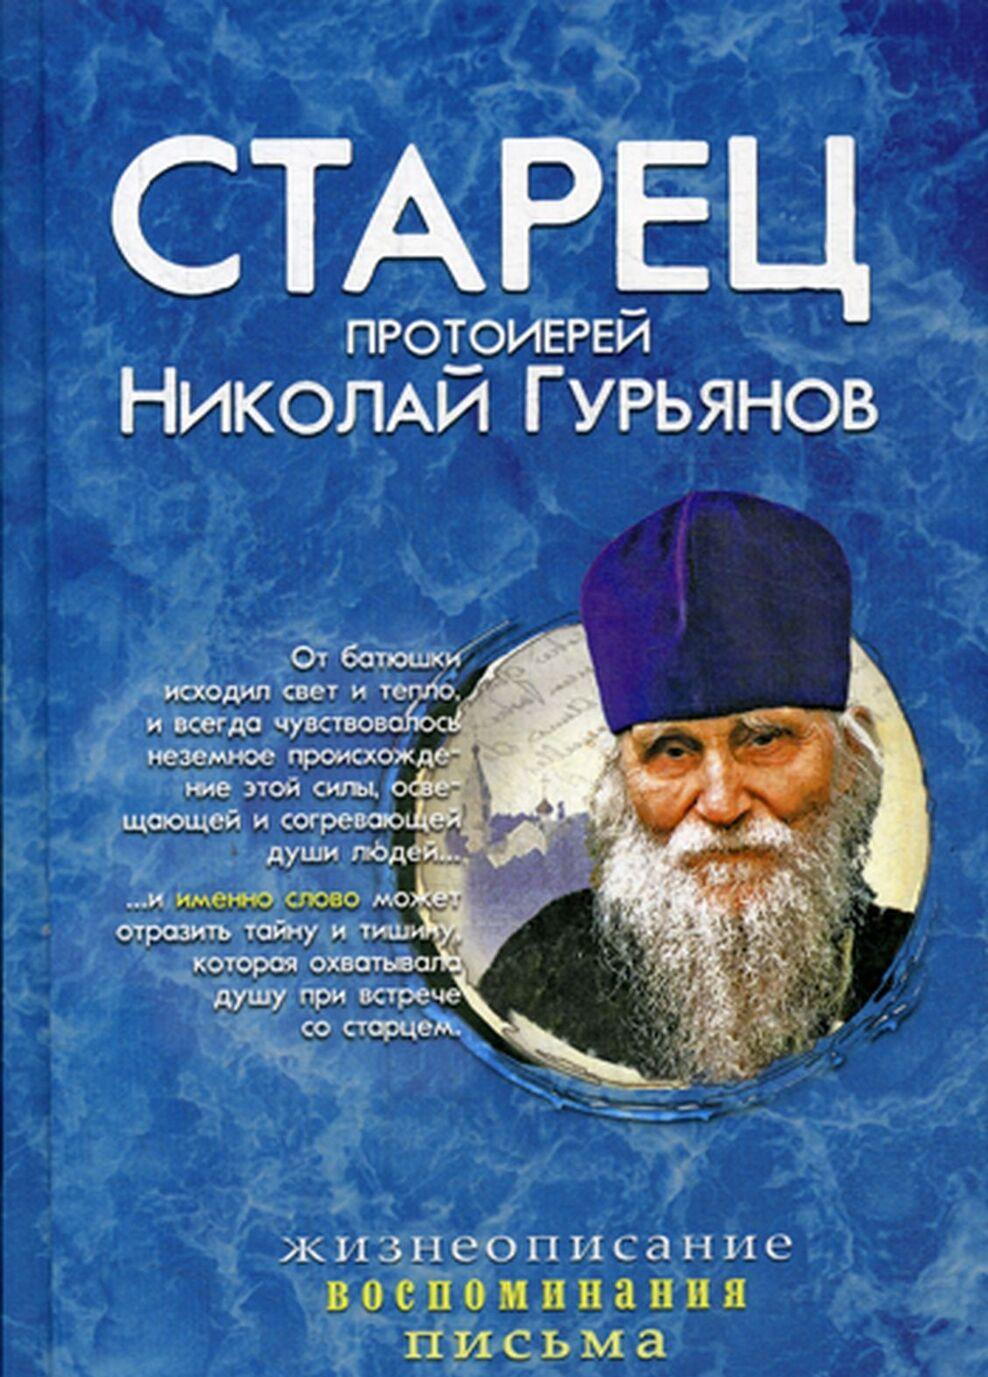 Книга Старец протоиерей Николай Гурьянов 